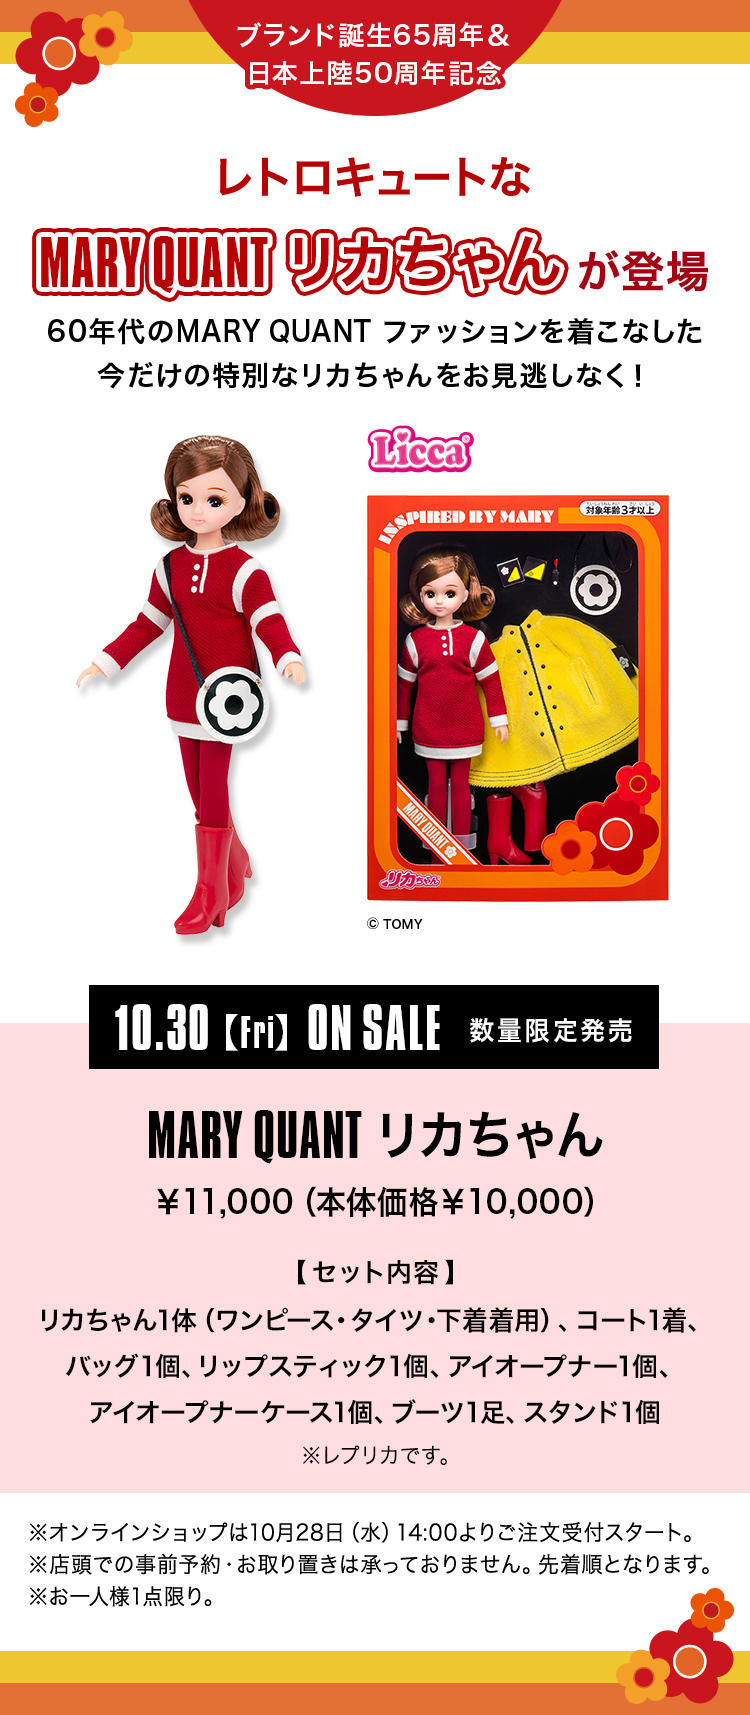 MARY QUANT リカちゃん｜MARY QUANT COSMETICS LTD.